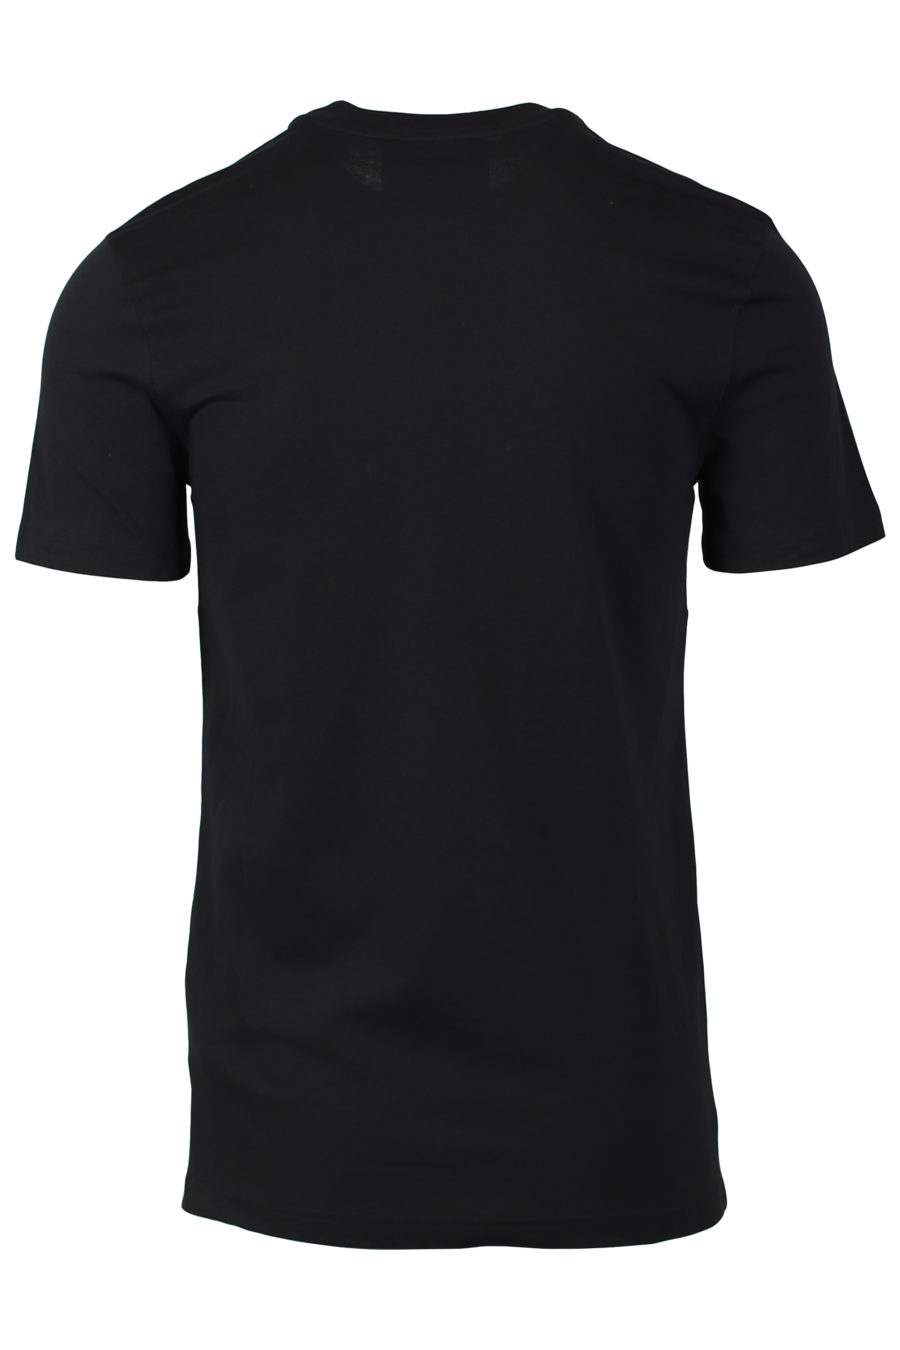 T-shirt preto logotipo preto e branco - IMG 0946